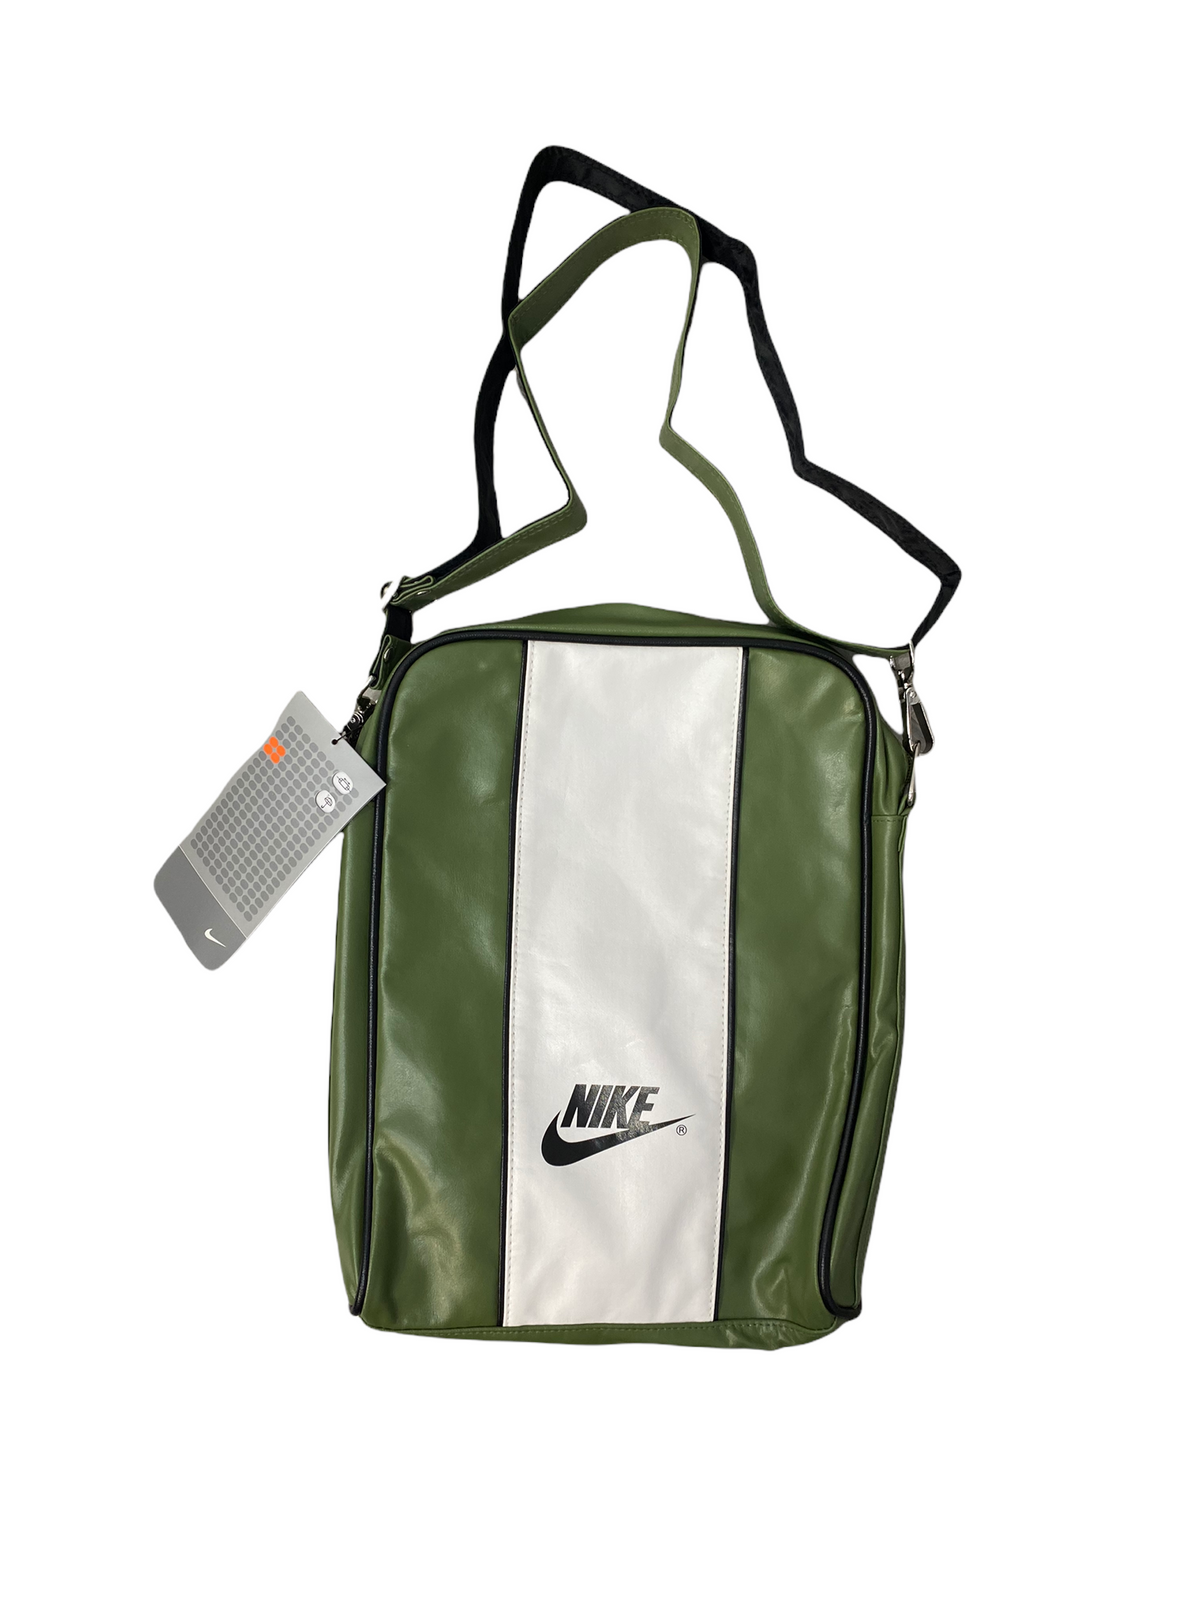 VINTAGE 2006 NIKE SIDE BAG IN GREEN - Not In Your Wardrobe™ - [Vendor]